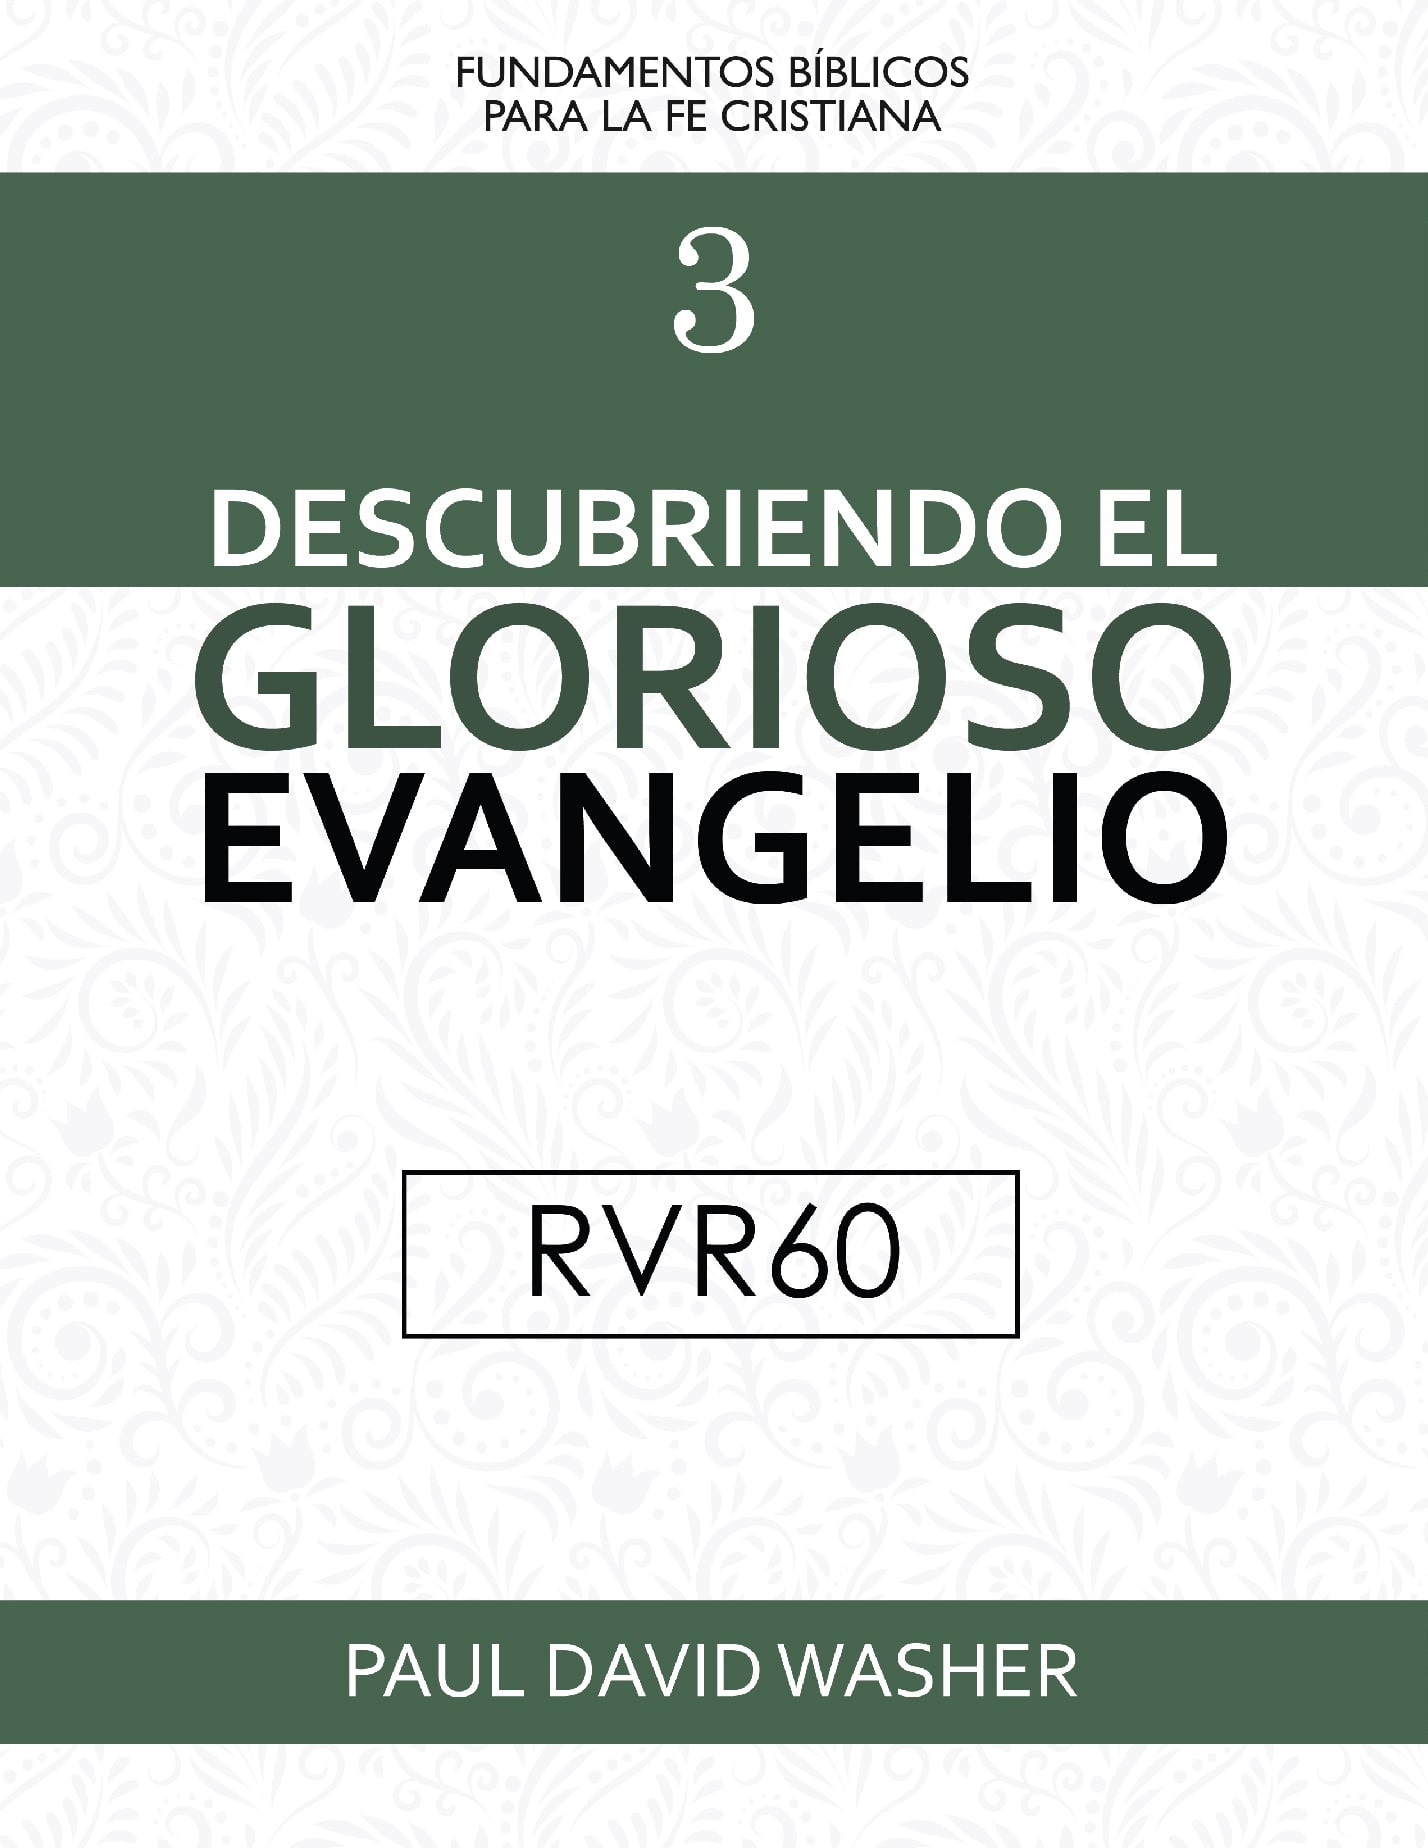 Descubriendo El Glorioso Evangelio RVR60